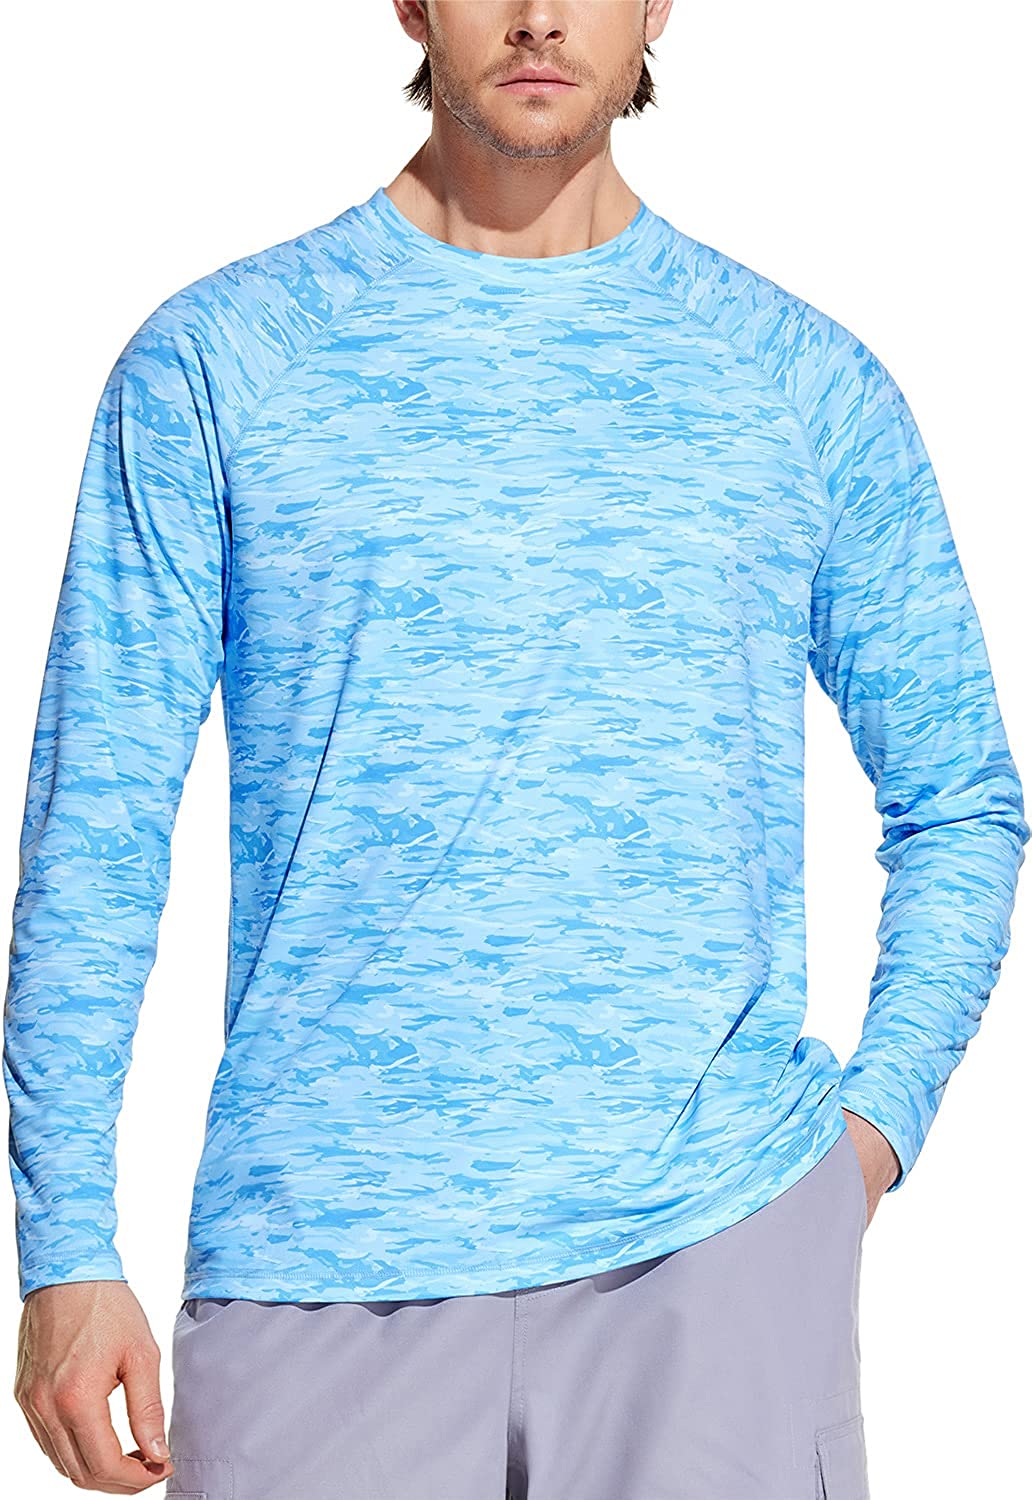 Loose-Fit Long Sleeve Shirts Details about   TSLA Men's Rashguard Swim Shirts UPF 50 